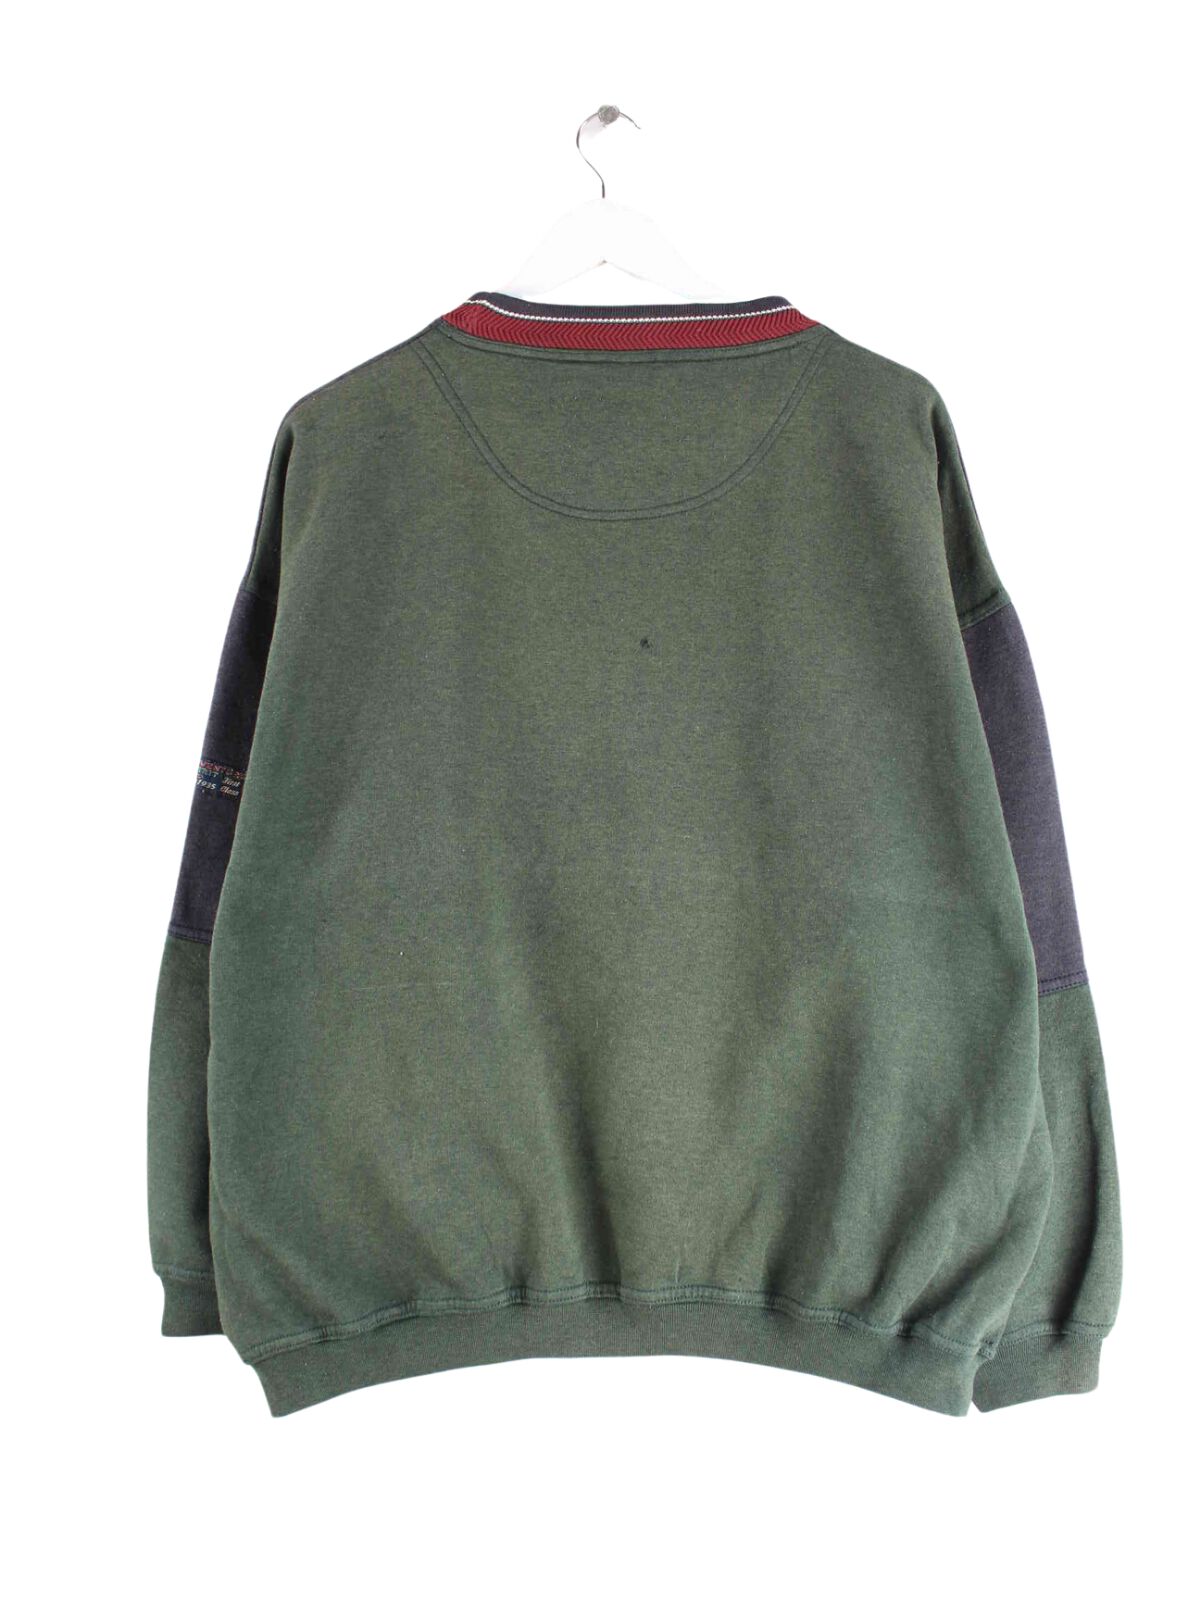 C&A 90s Vintage Embroidered Sweater Grün L (back image)